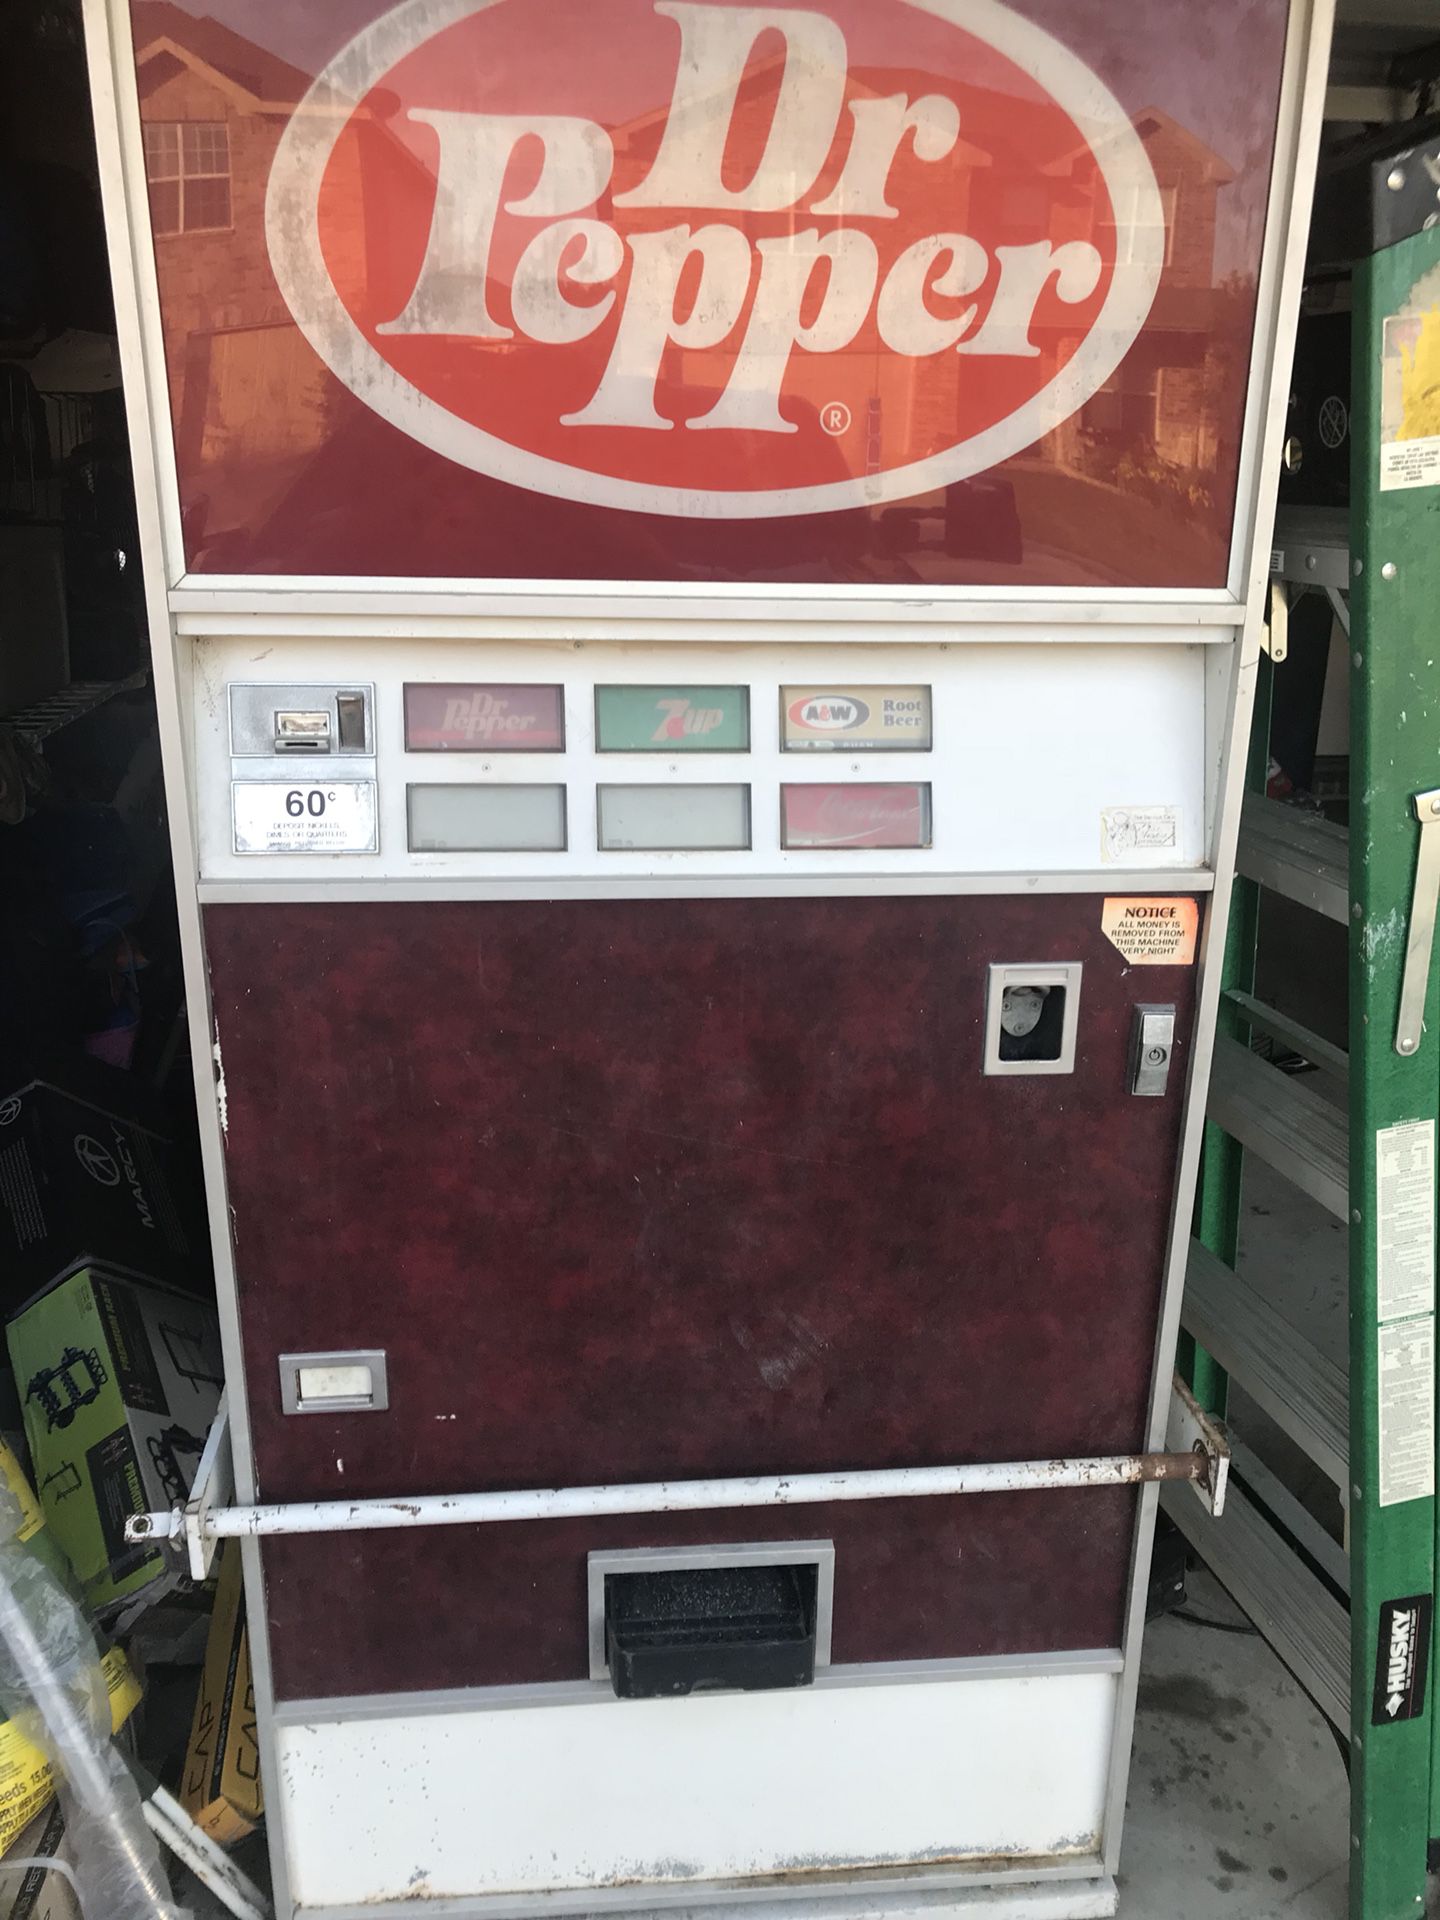 dee cobb recommends vintage dr pepper machine pic